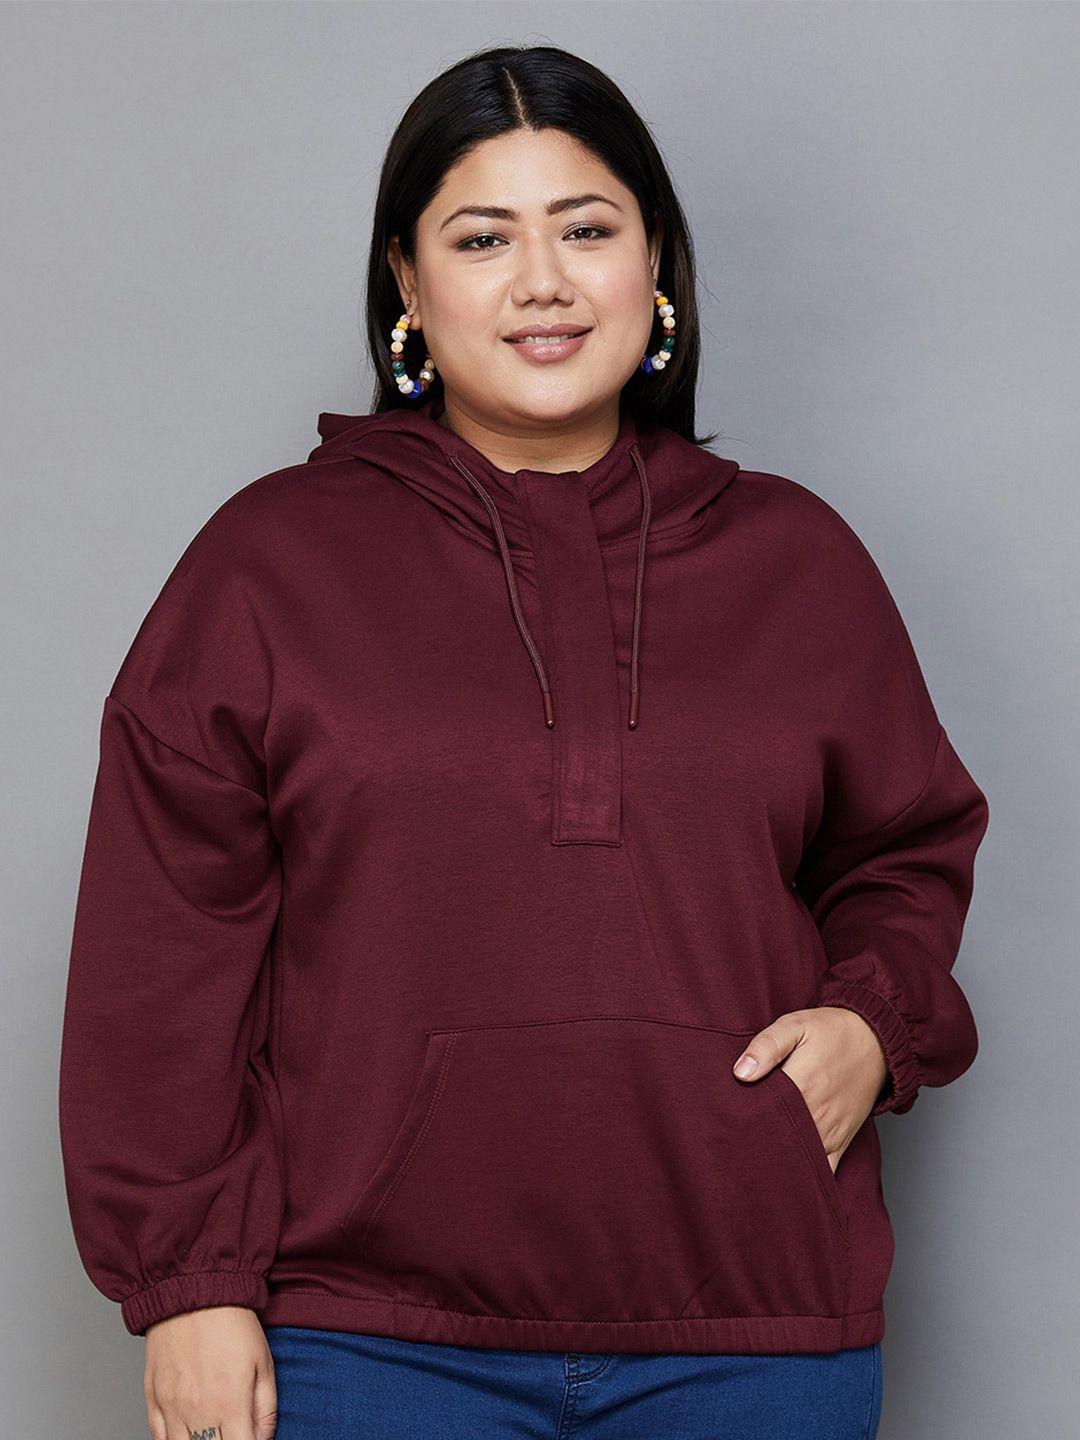 nexus by lifestyle plus size hooded sweatshirt